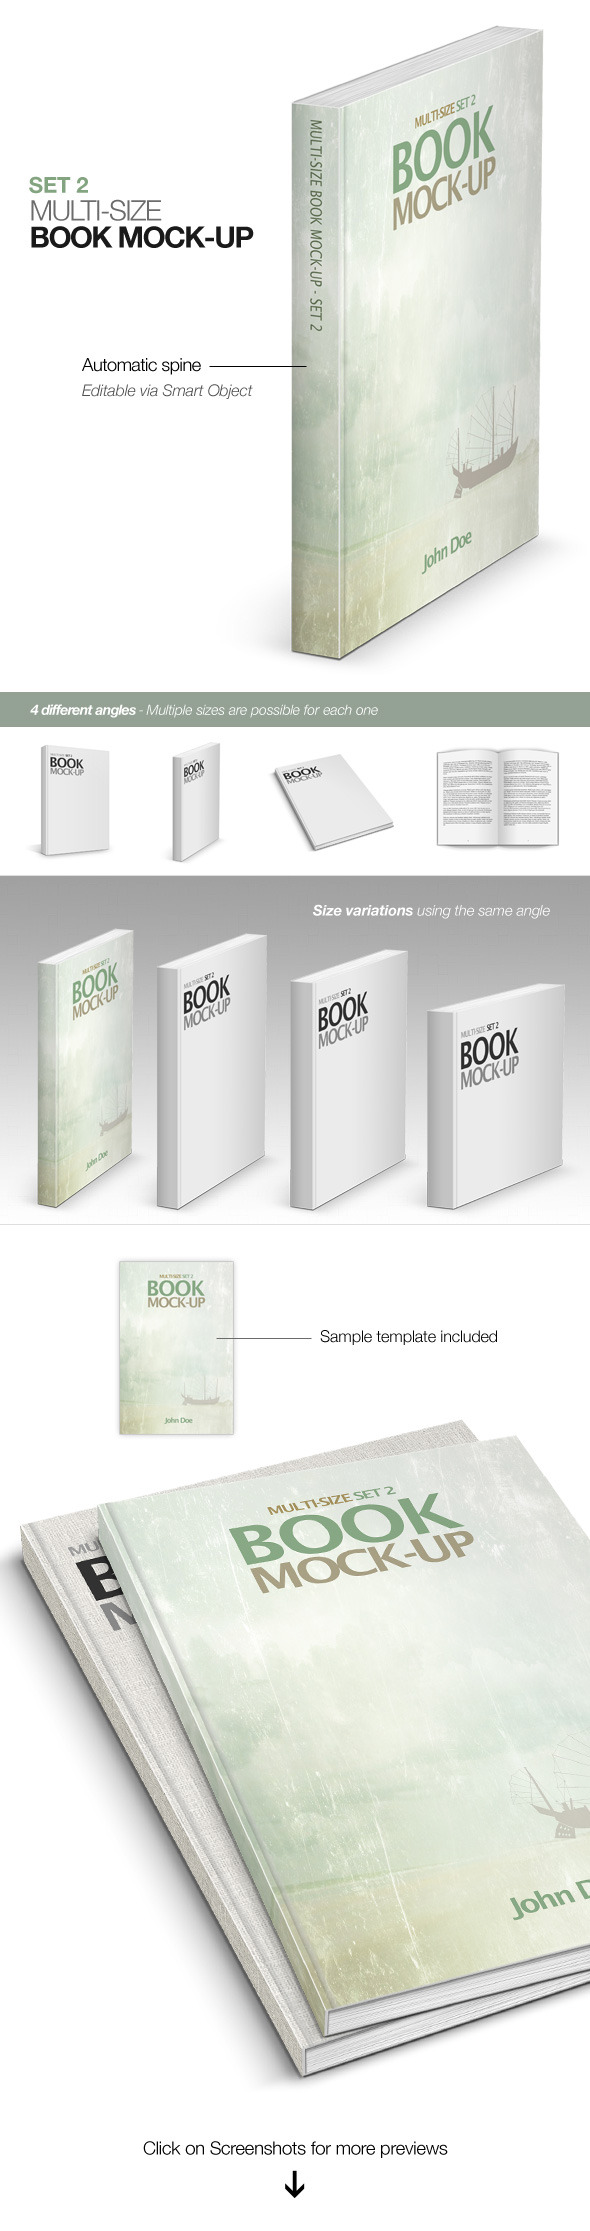 Multi-size Book Mockup - Set 2